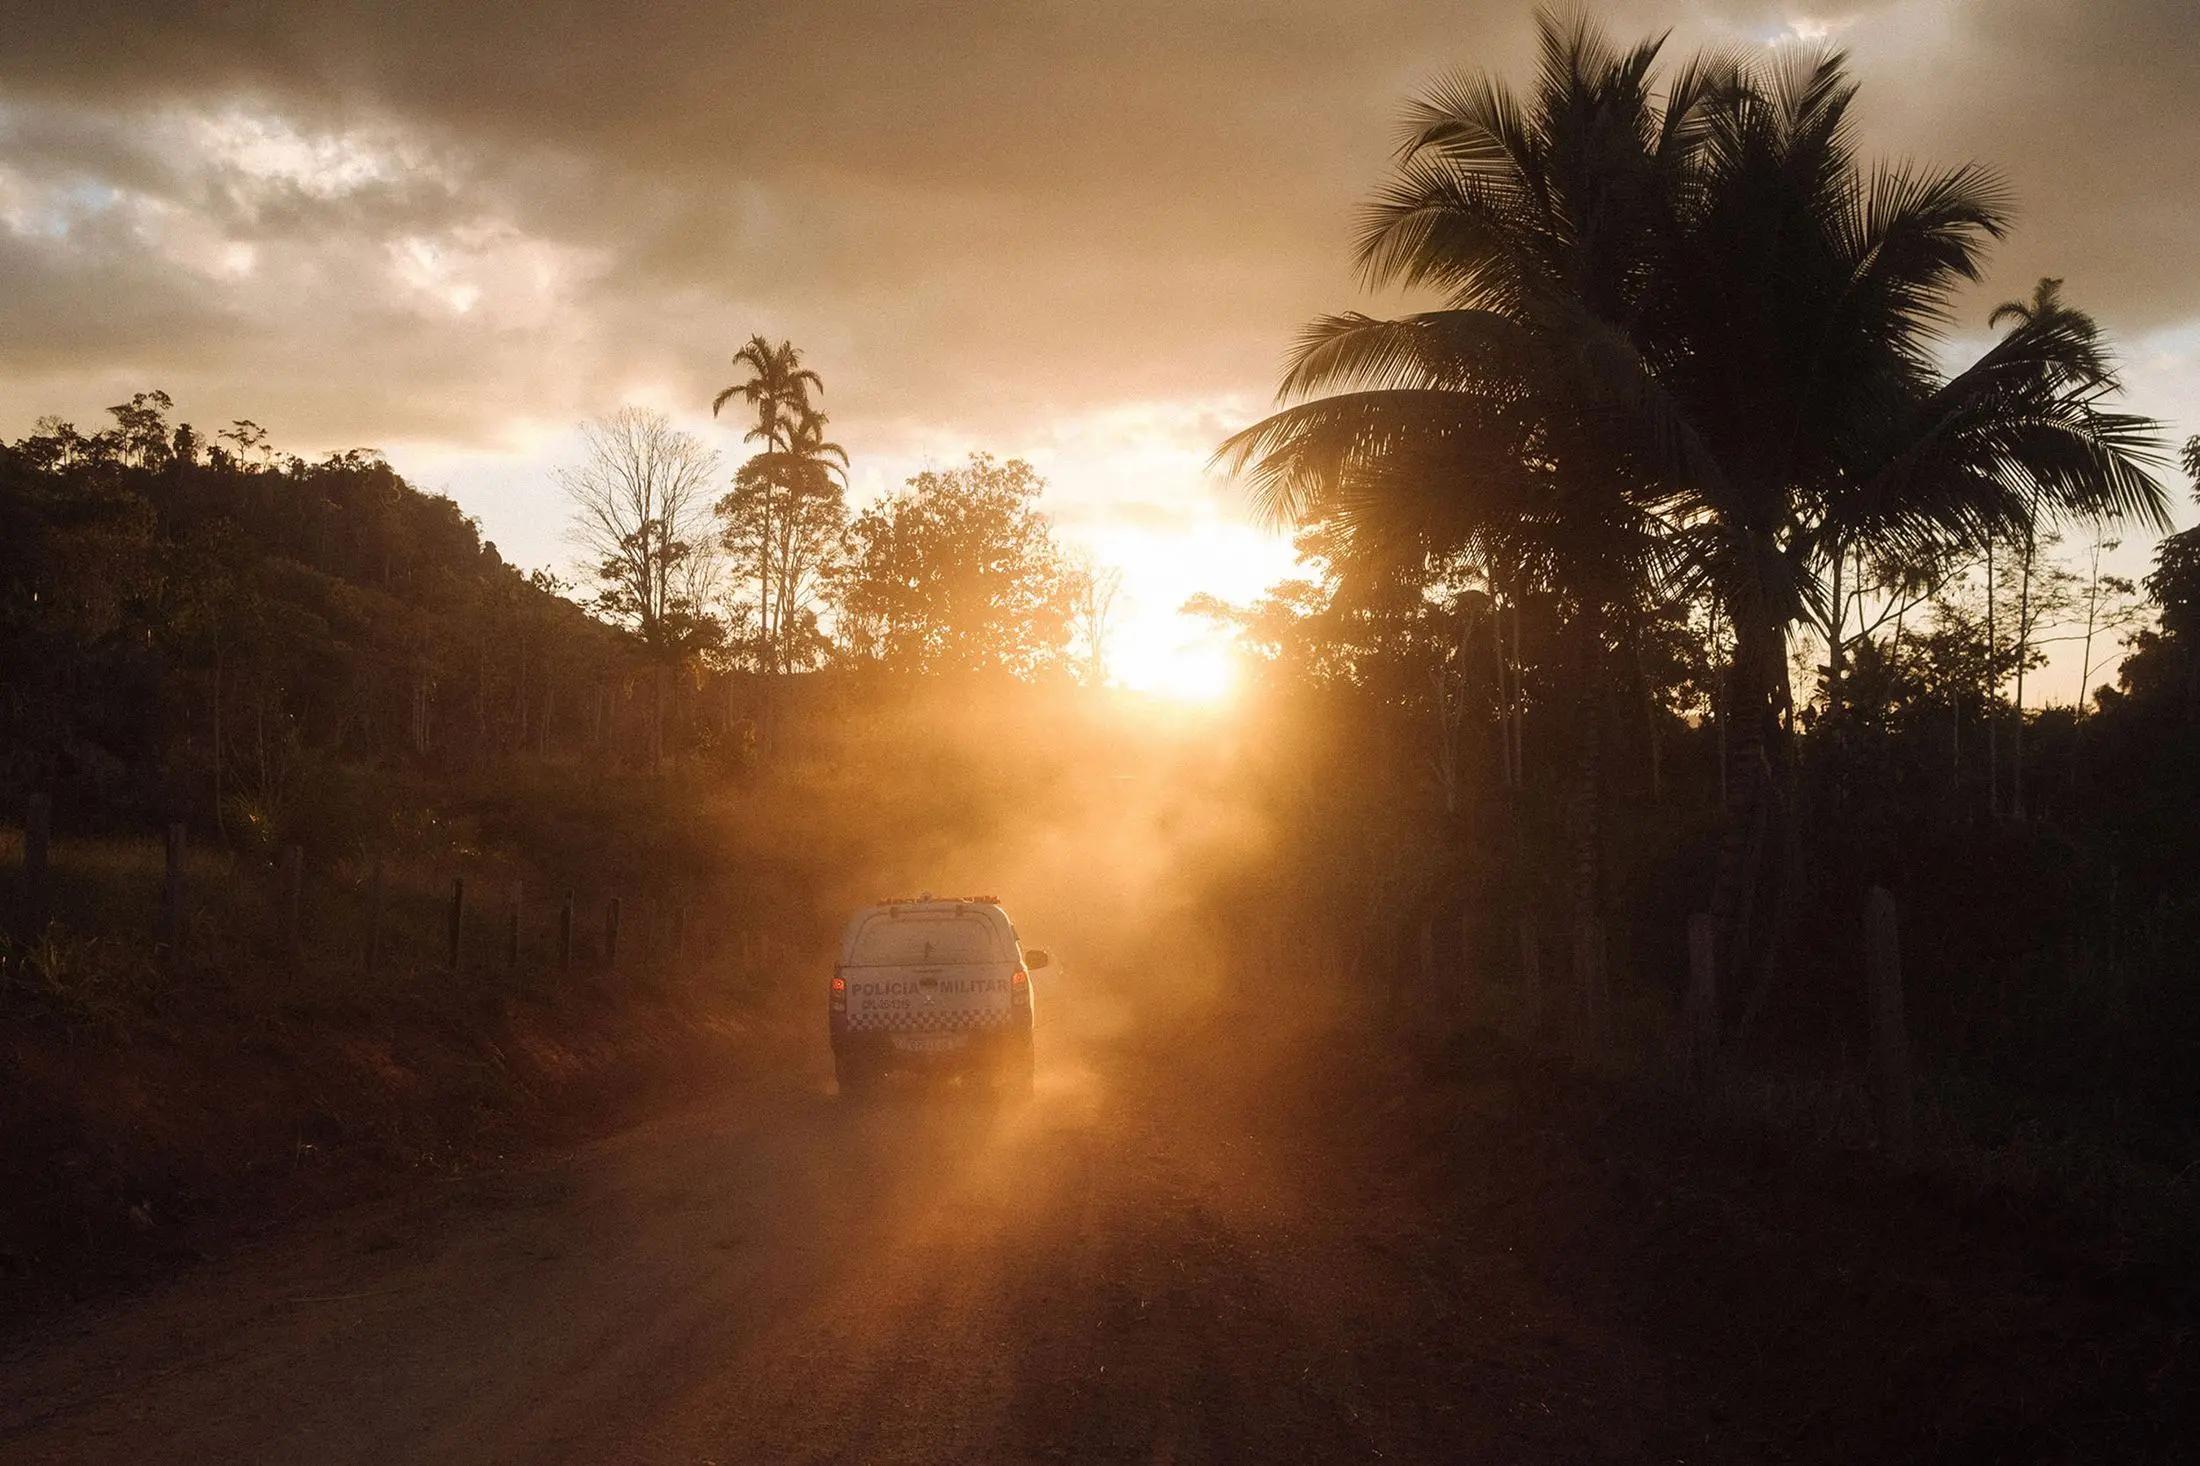 Sun coming through rainforest showing the ranger car